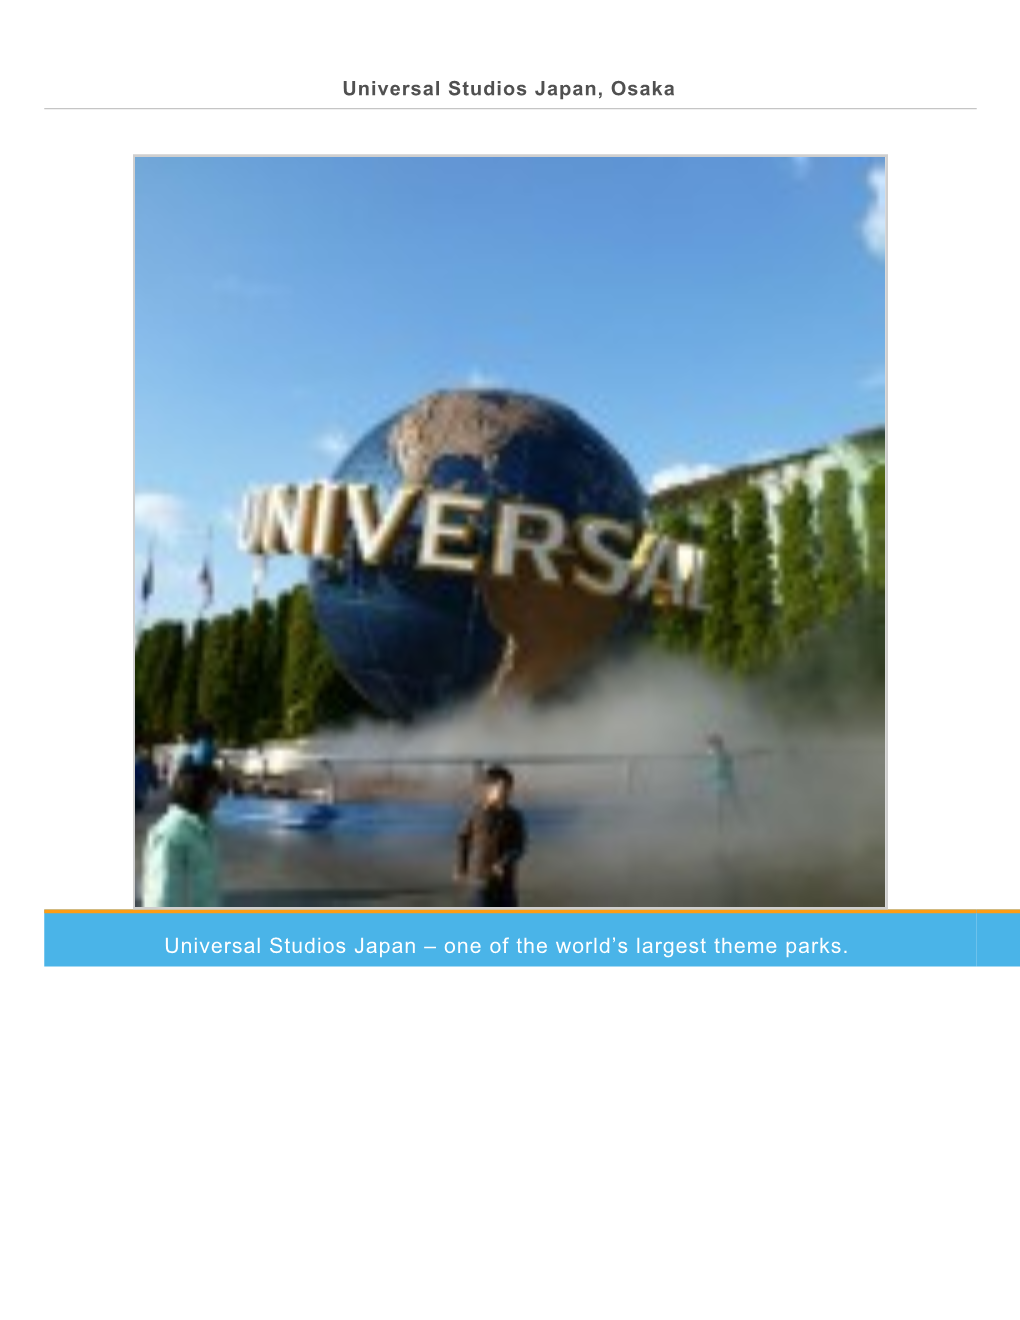 Where Is Universal Studios Japan? the Universal Studios Japan (USJ) Is Situated in Osaka, Japan